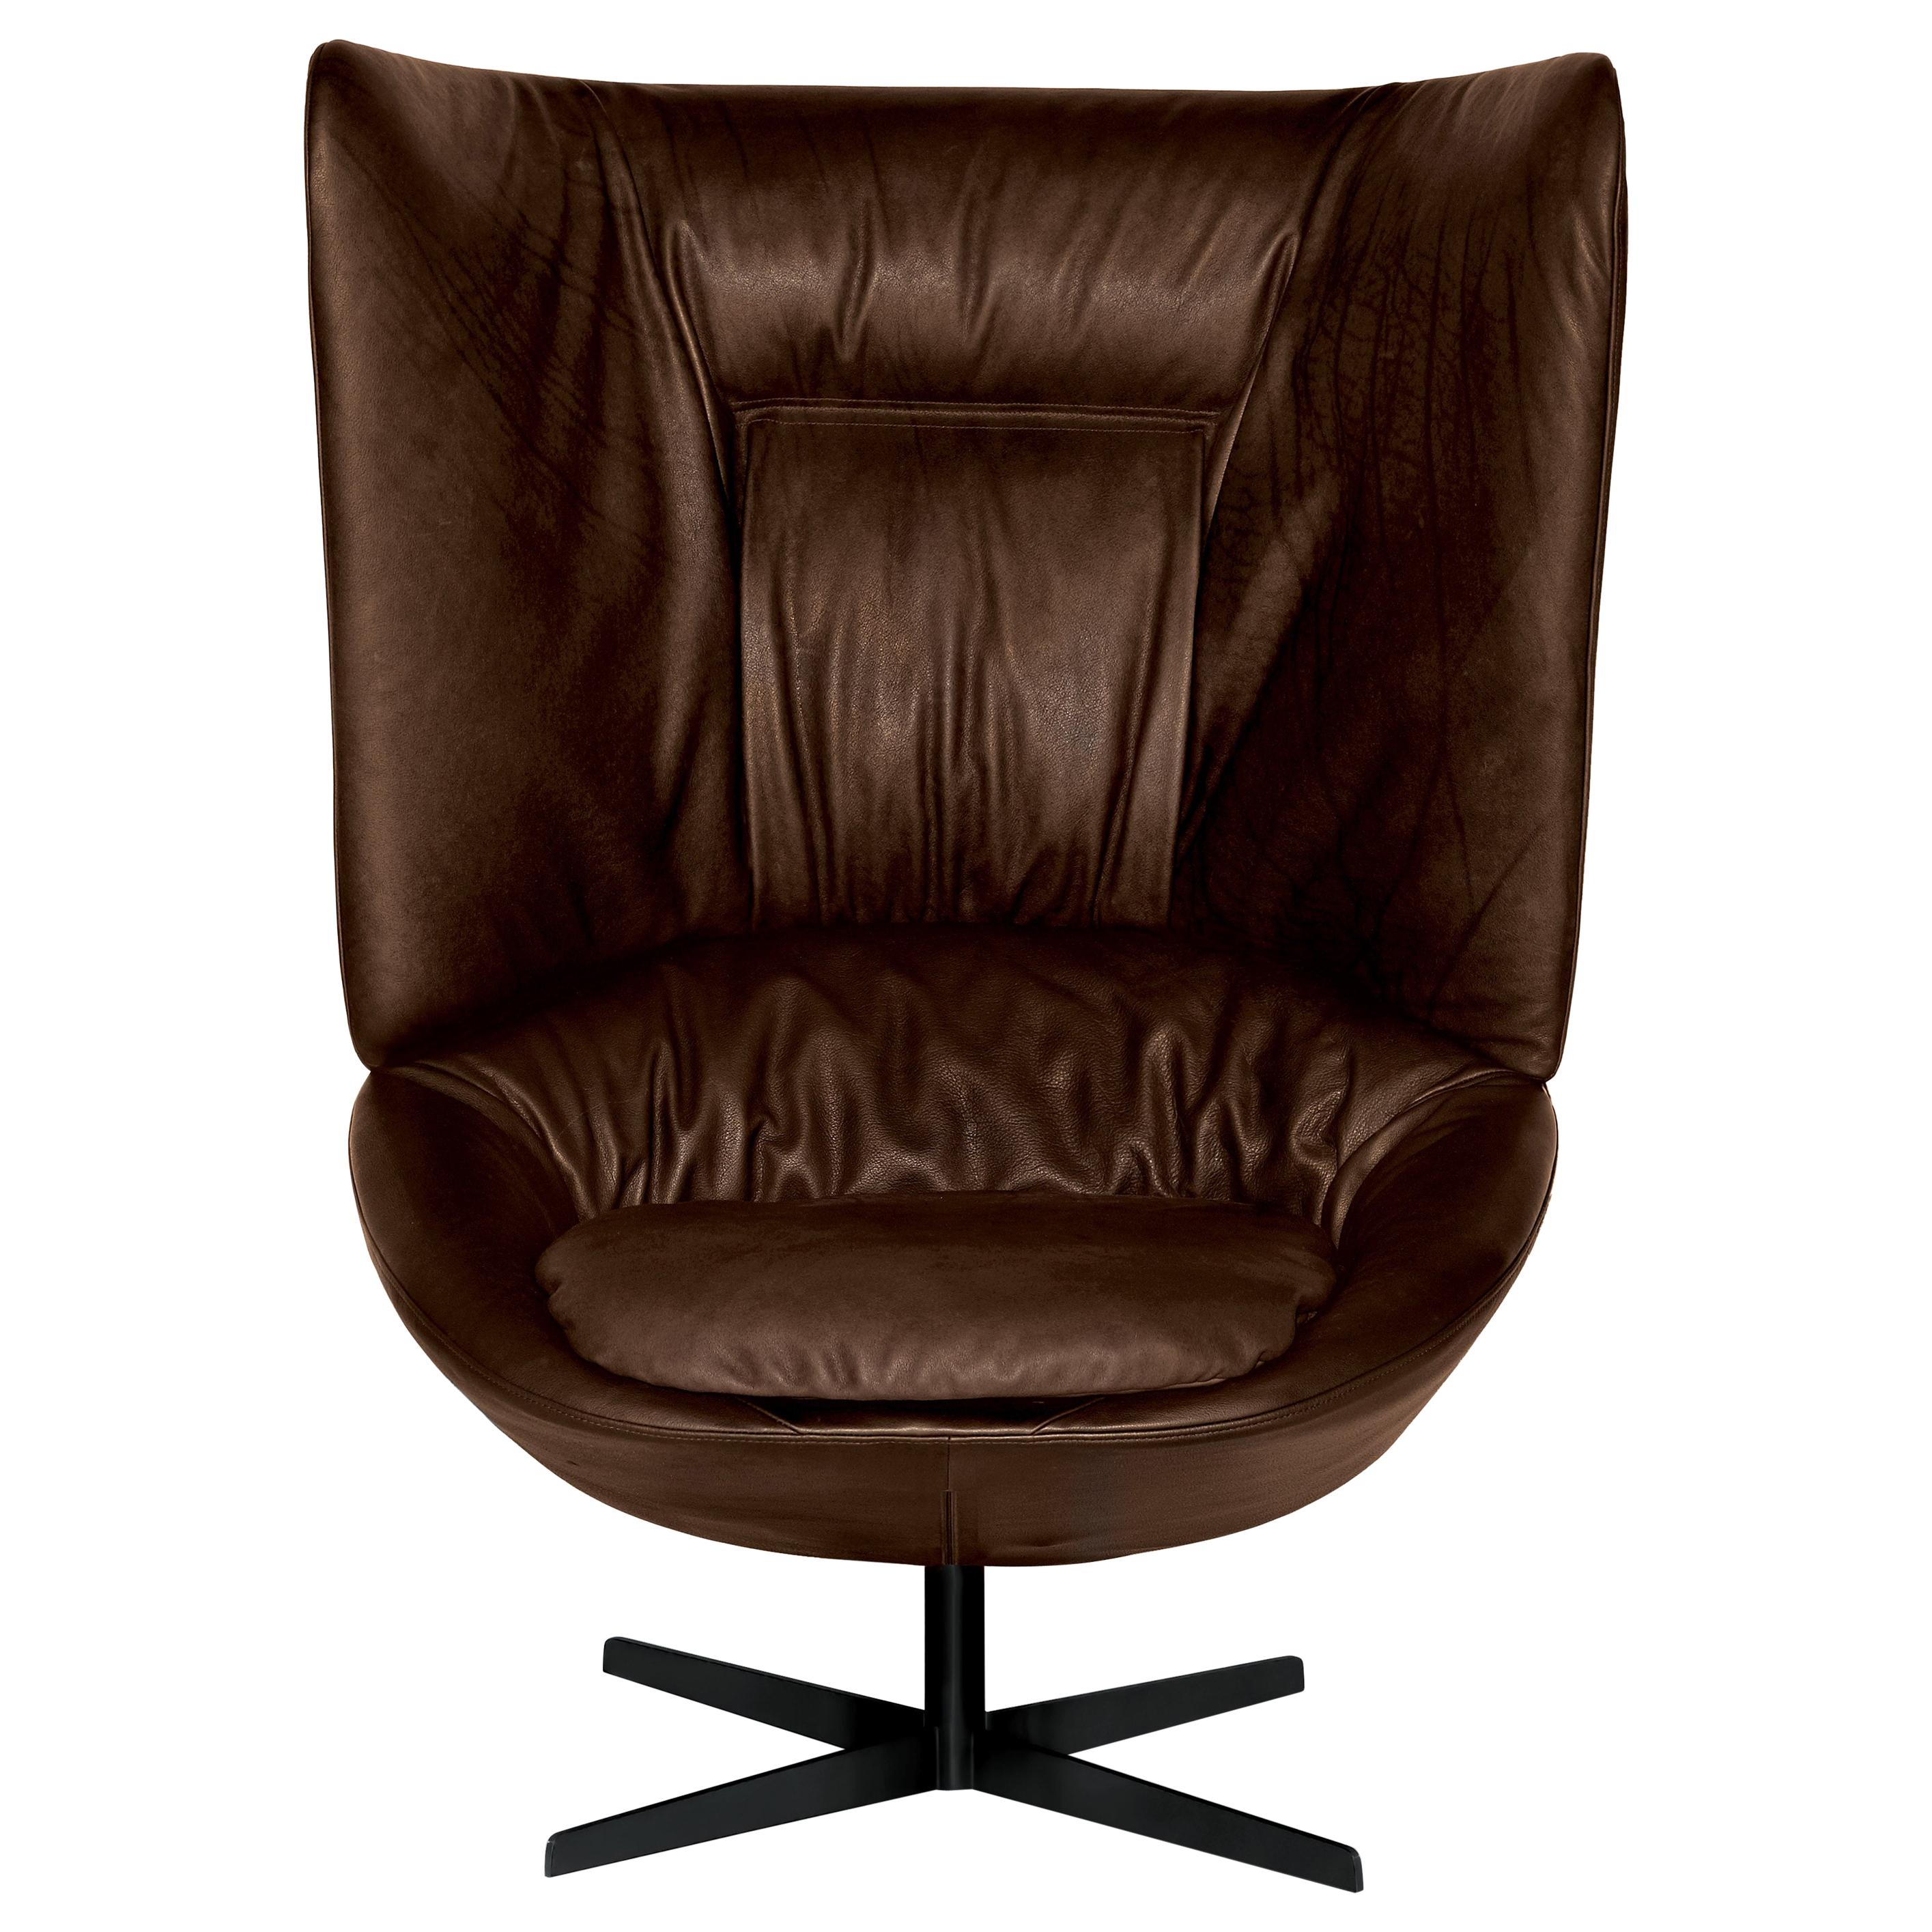 Arflex Ladle Armchair with High Backrest in Giada Leather by Luca Nichetto